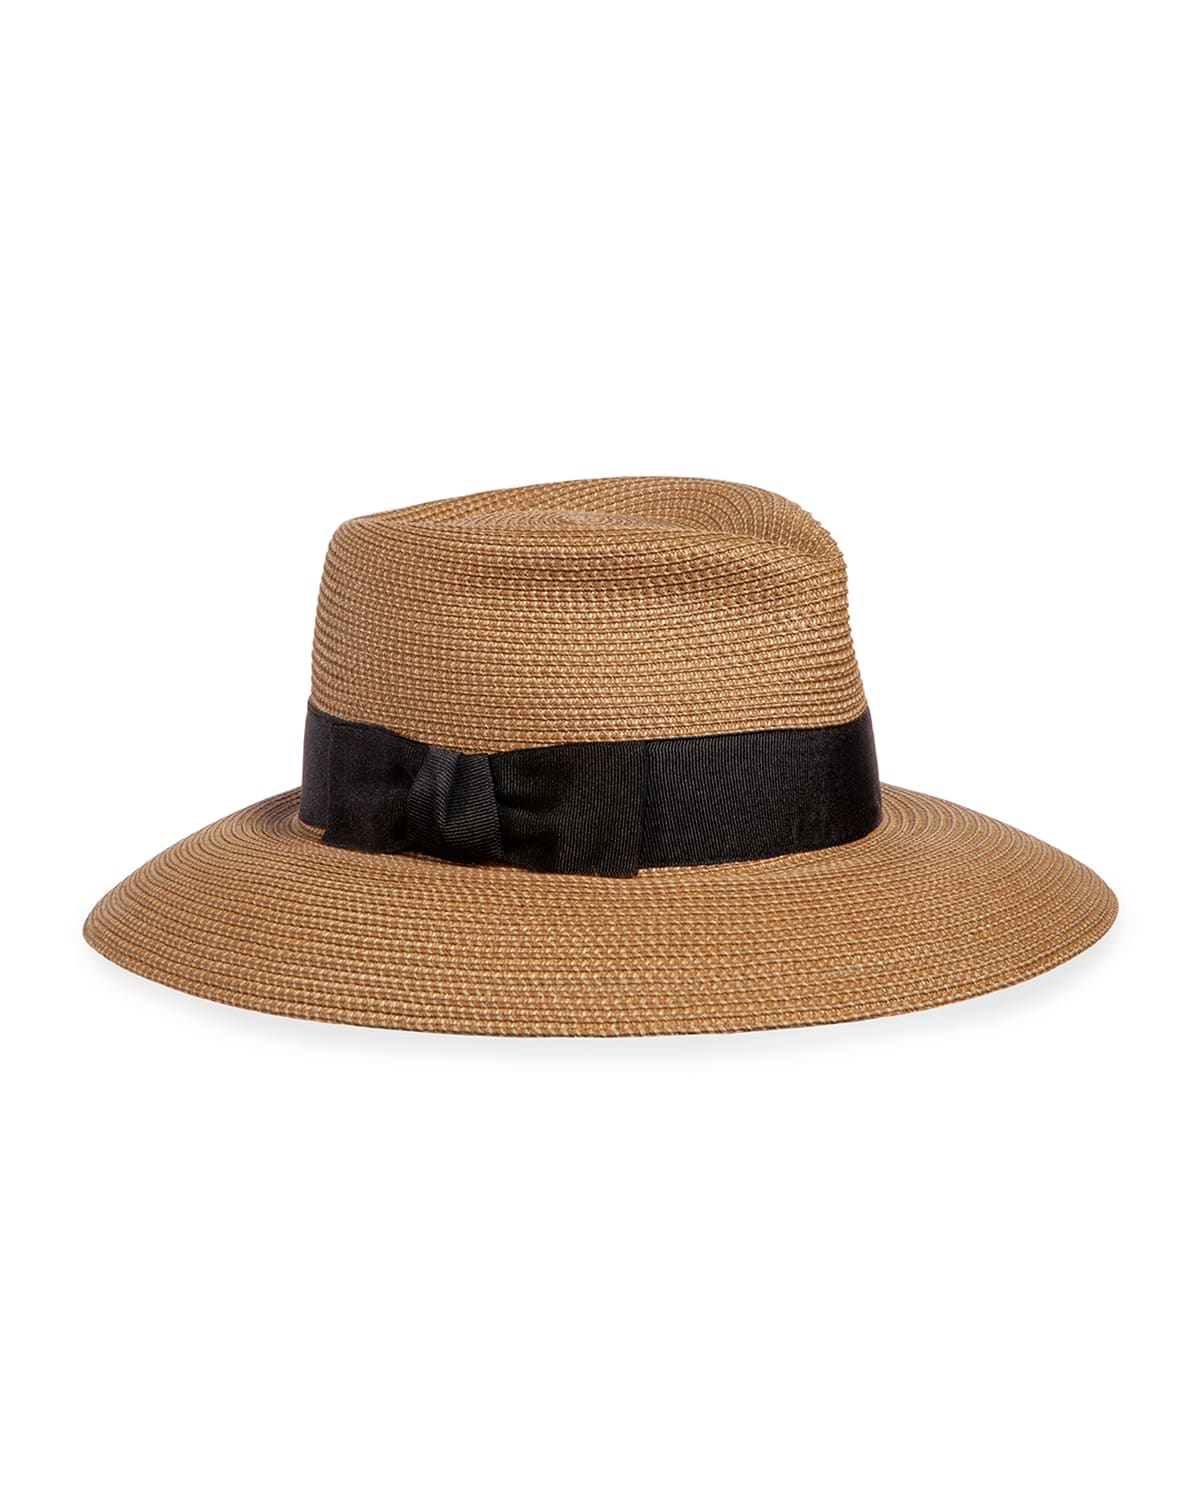 Eric Javits Phoenix Woven Boater Hat, Natural/black In Natural / Black